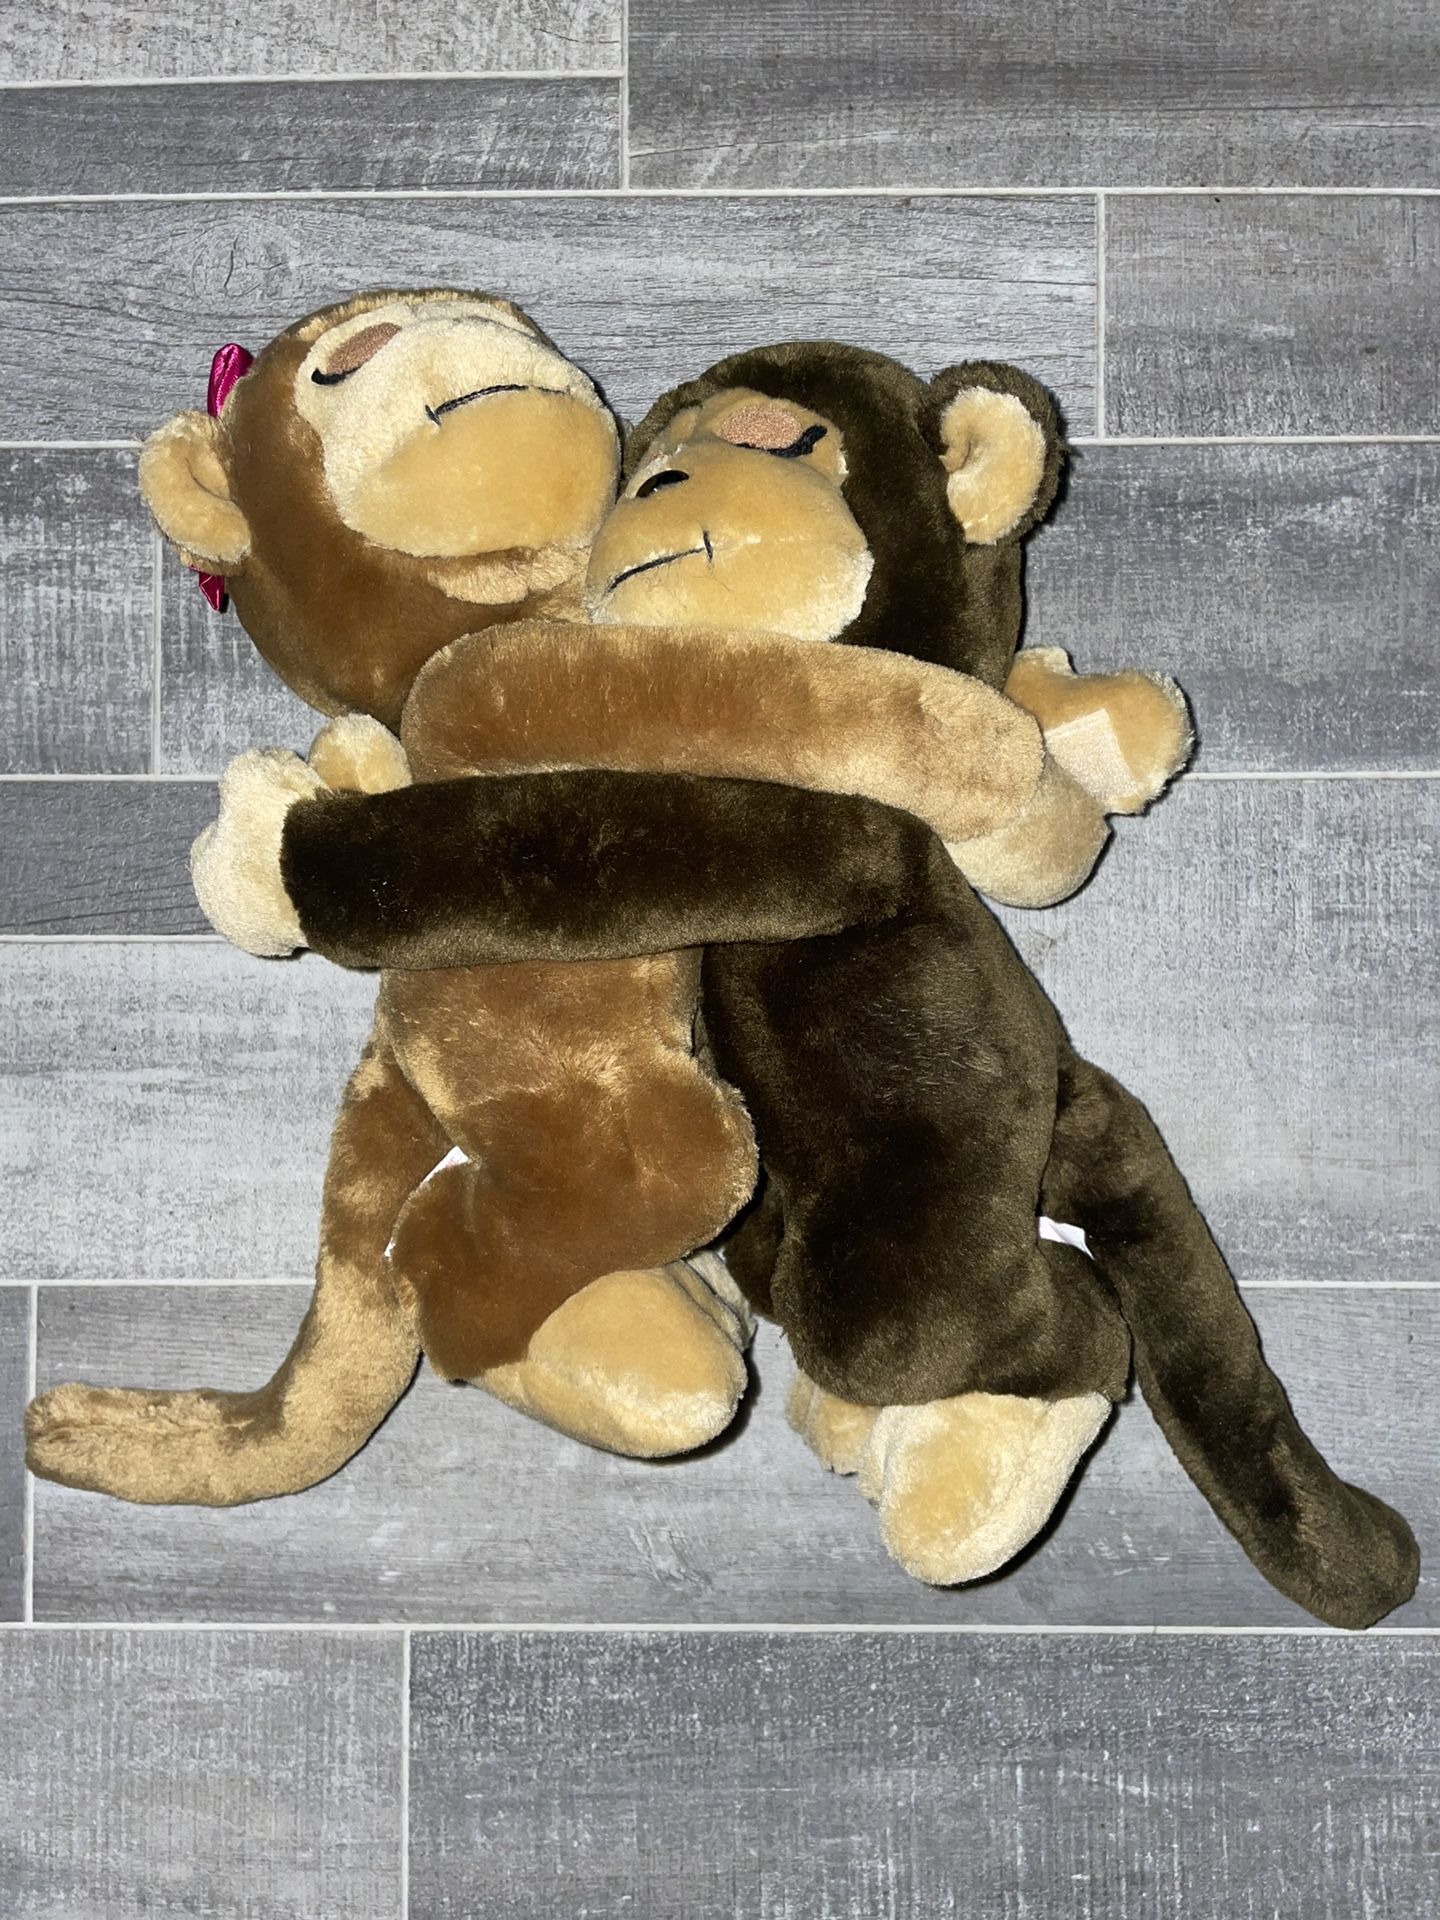 Dakin 1975 Hugging Love Monkeys Holding Hands Vintage Plush Animal Bears